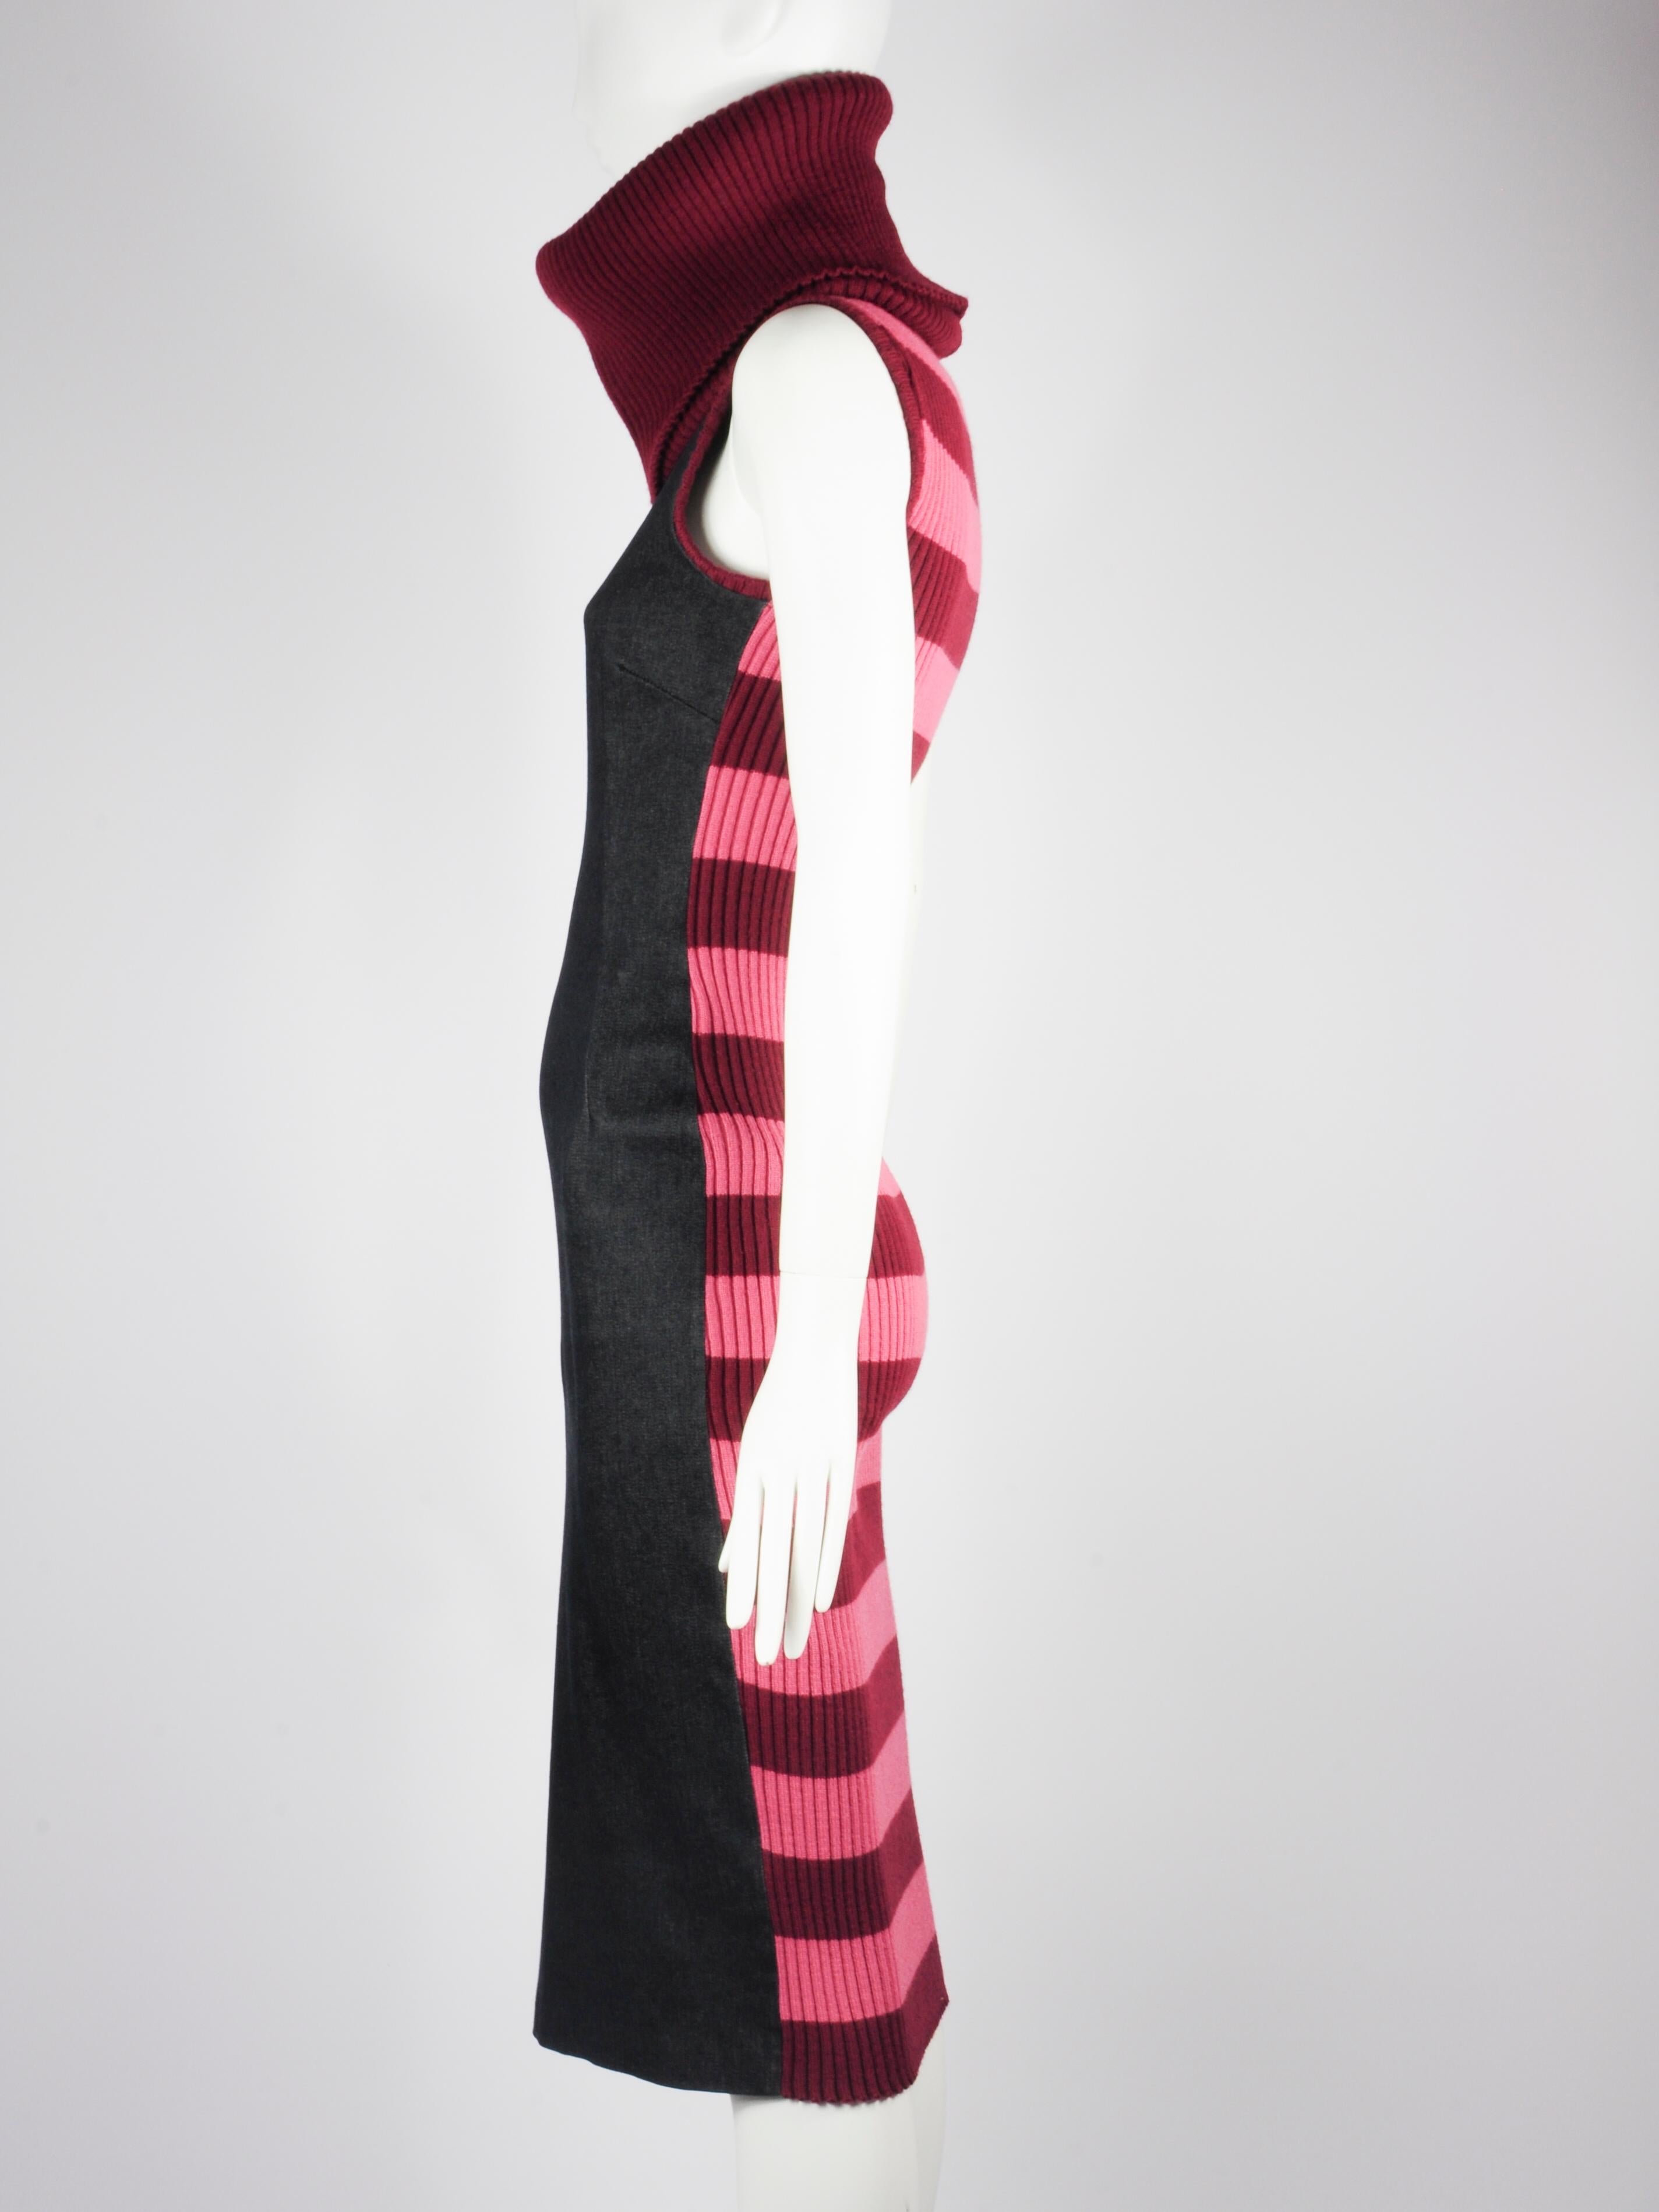 D&G Dolce & Gabbana Denim and Knitwear Dress Striped Turtleneck Sleeveless 1990s For Sale 7